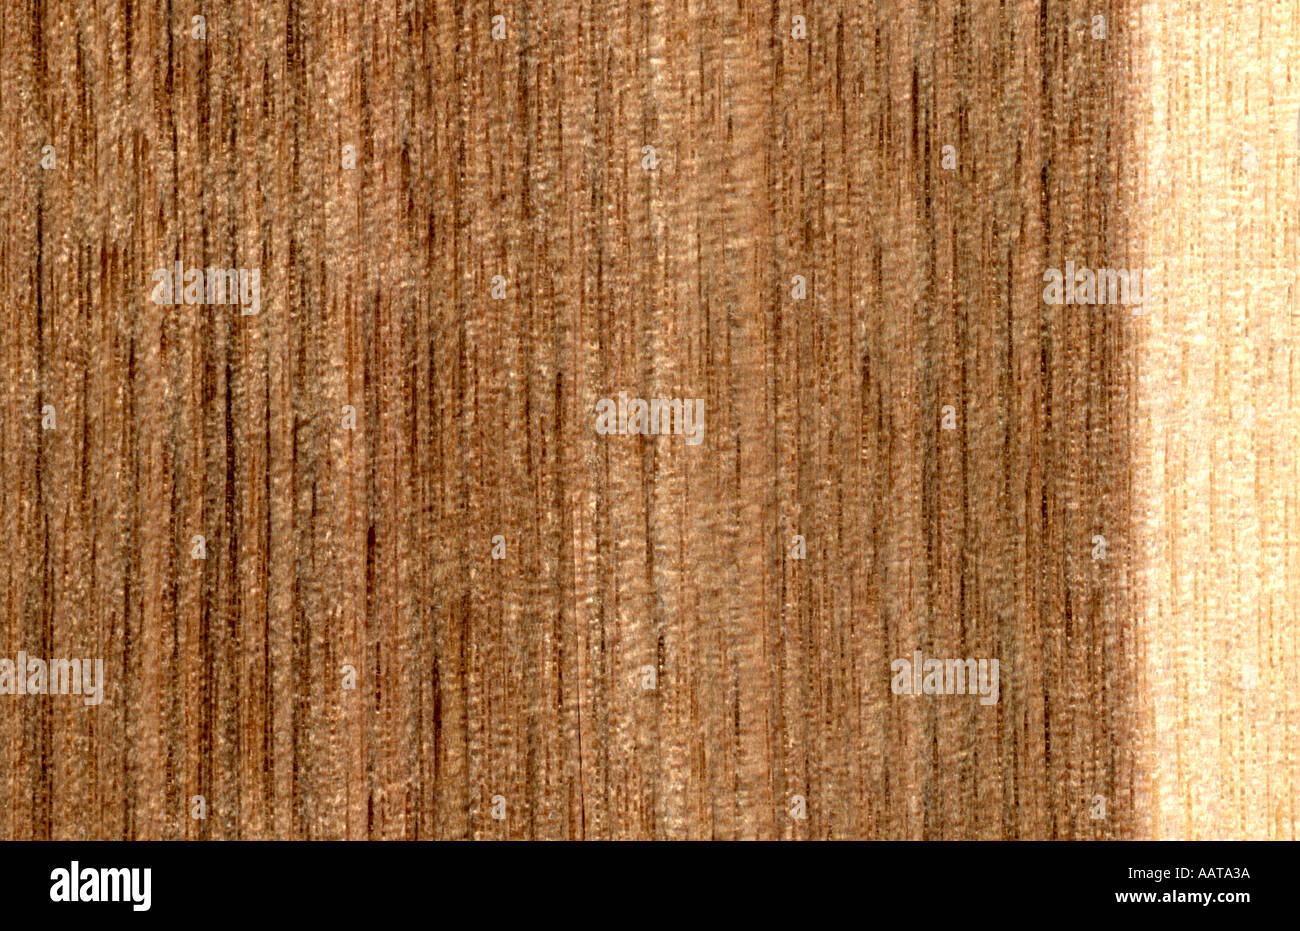 Butternut wood grain showing light sapwood and darker heartwood North America Juglans cinerea Stock Photo